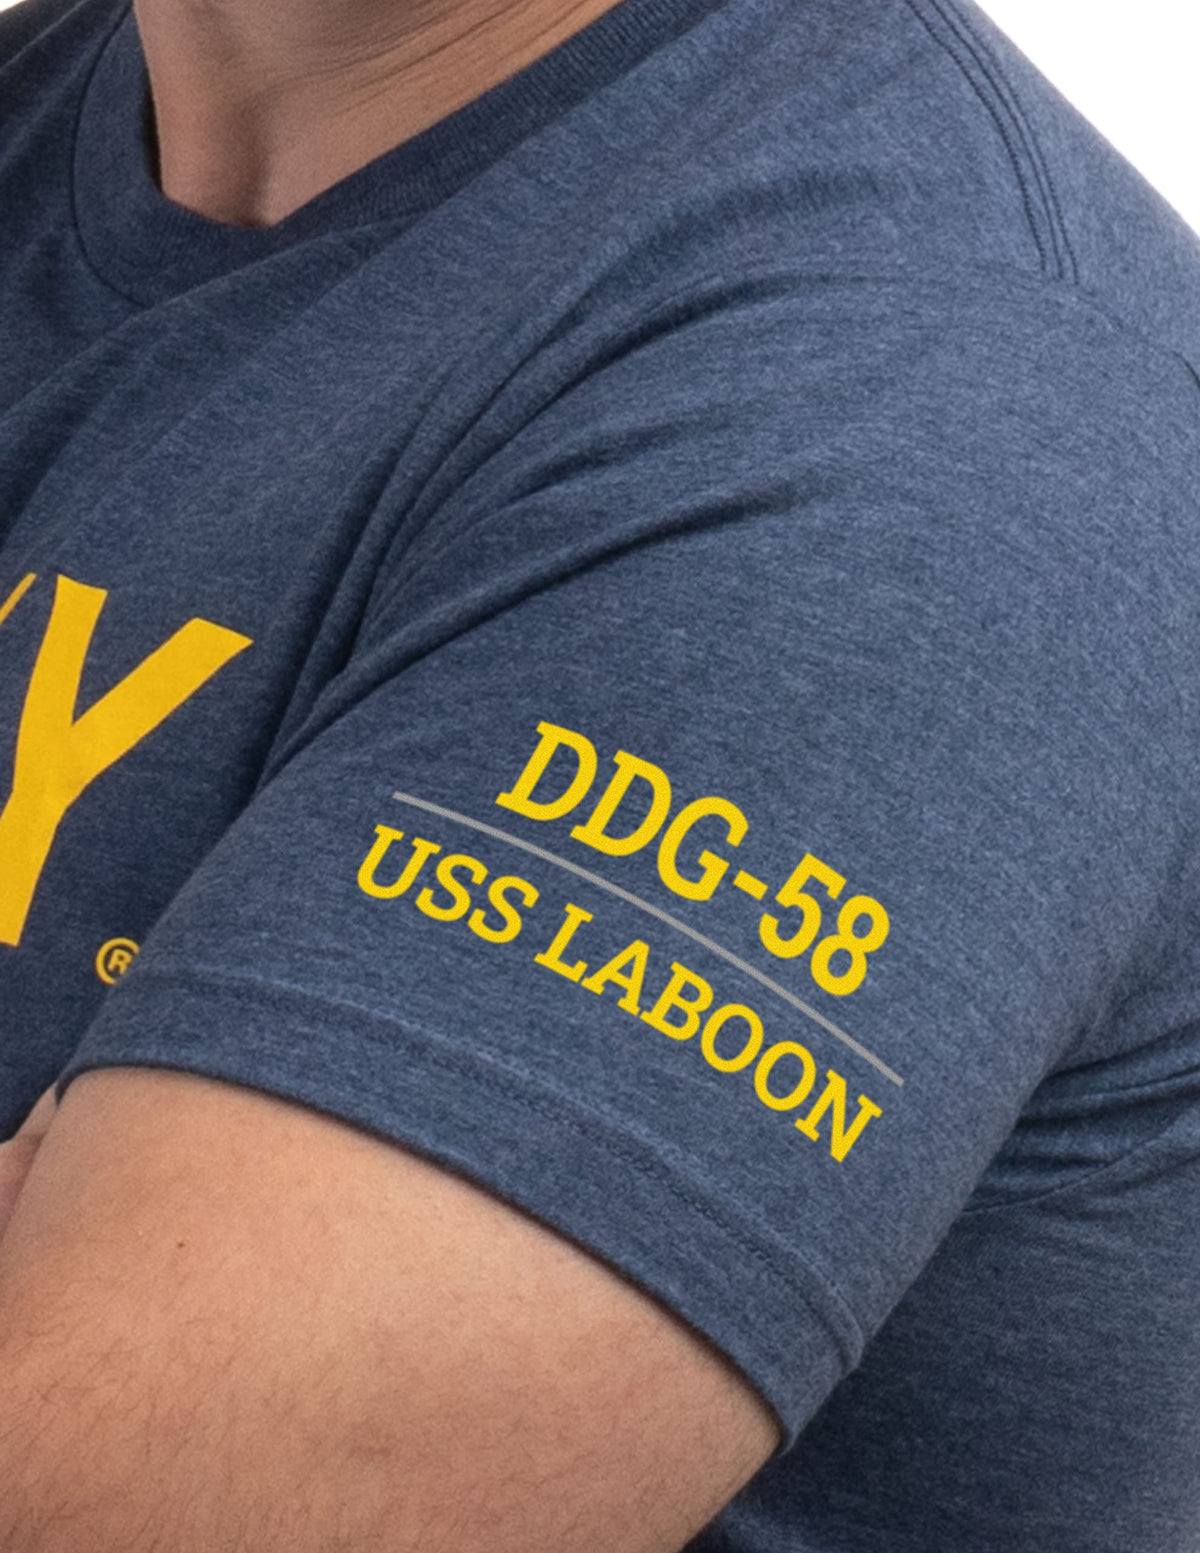 USS Laboon, DDG-58 | U.S. Navy Sailor Veteran USN United States Naval T-shirt for Men Women